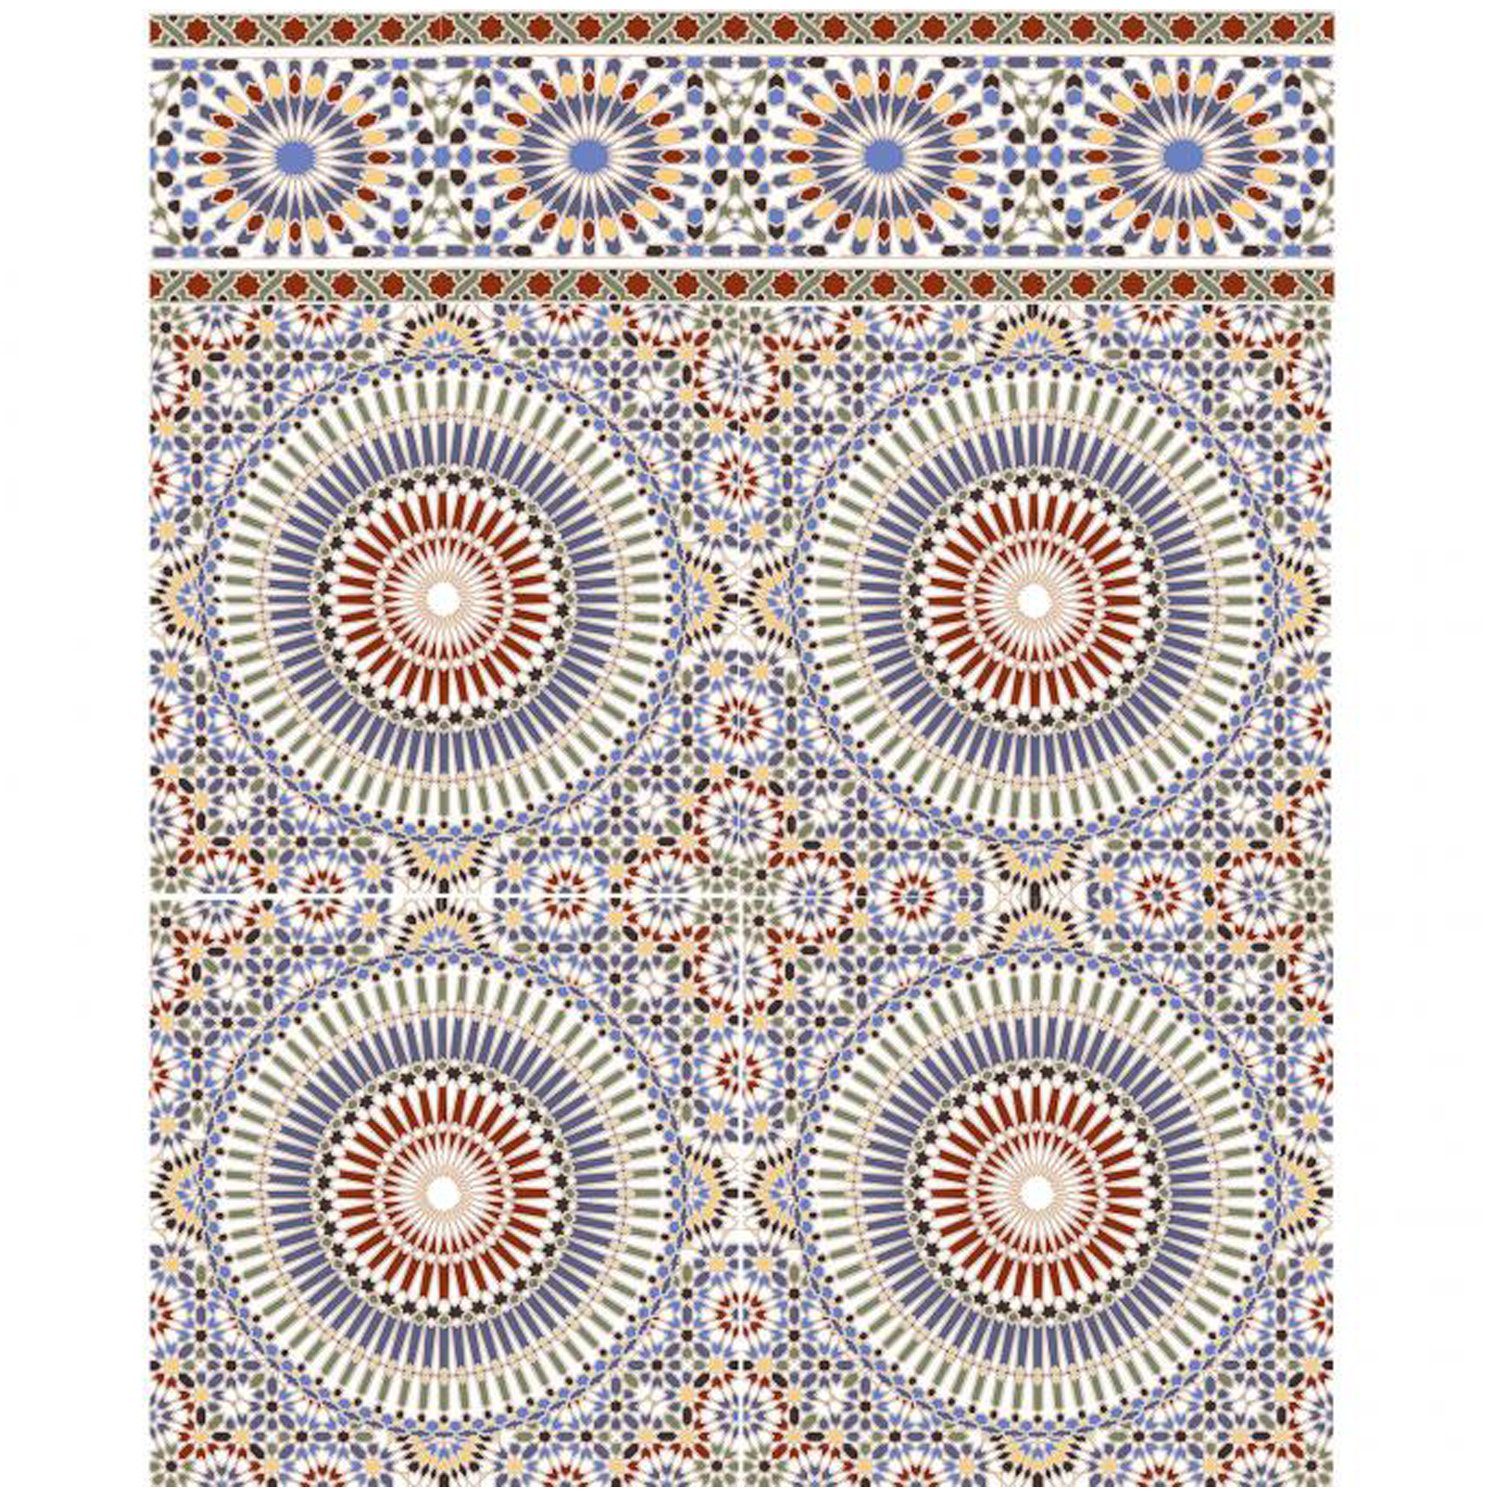 Casa Moro Wandfliese Marokkanische Wand-Fliesen Tanger 20x20 cm bunt mit Mosaik-Muster, Orientalische Wandfliesen für Küche Badezimmer Flur Küchenrückwand (1 Quadratmeter), FL16011, Mehrfarbig | Fliesen